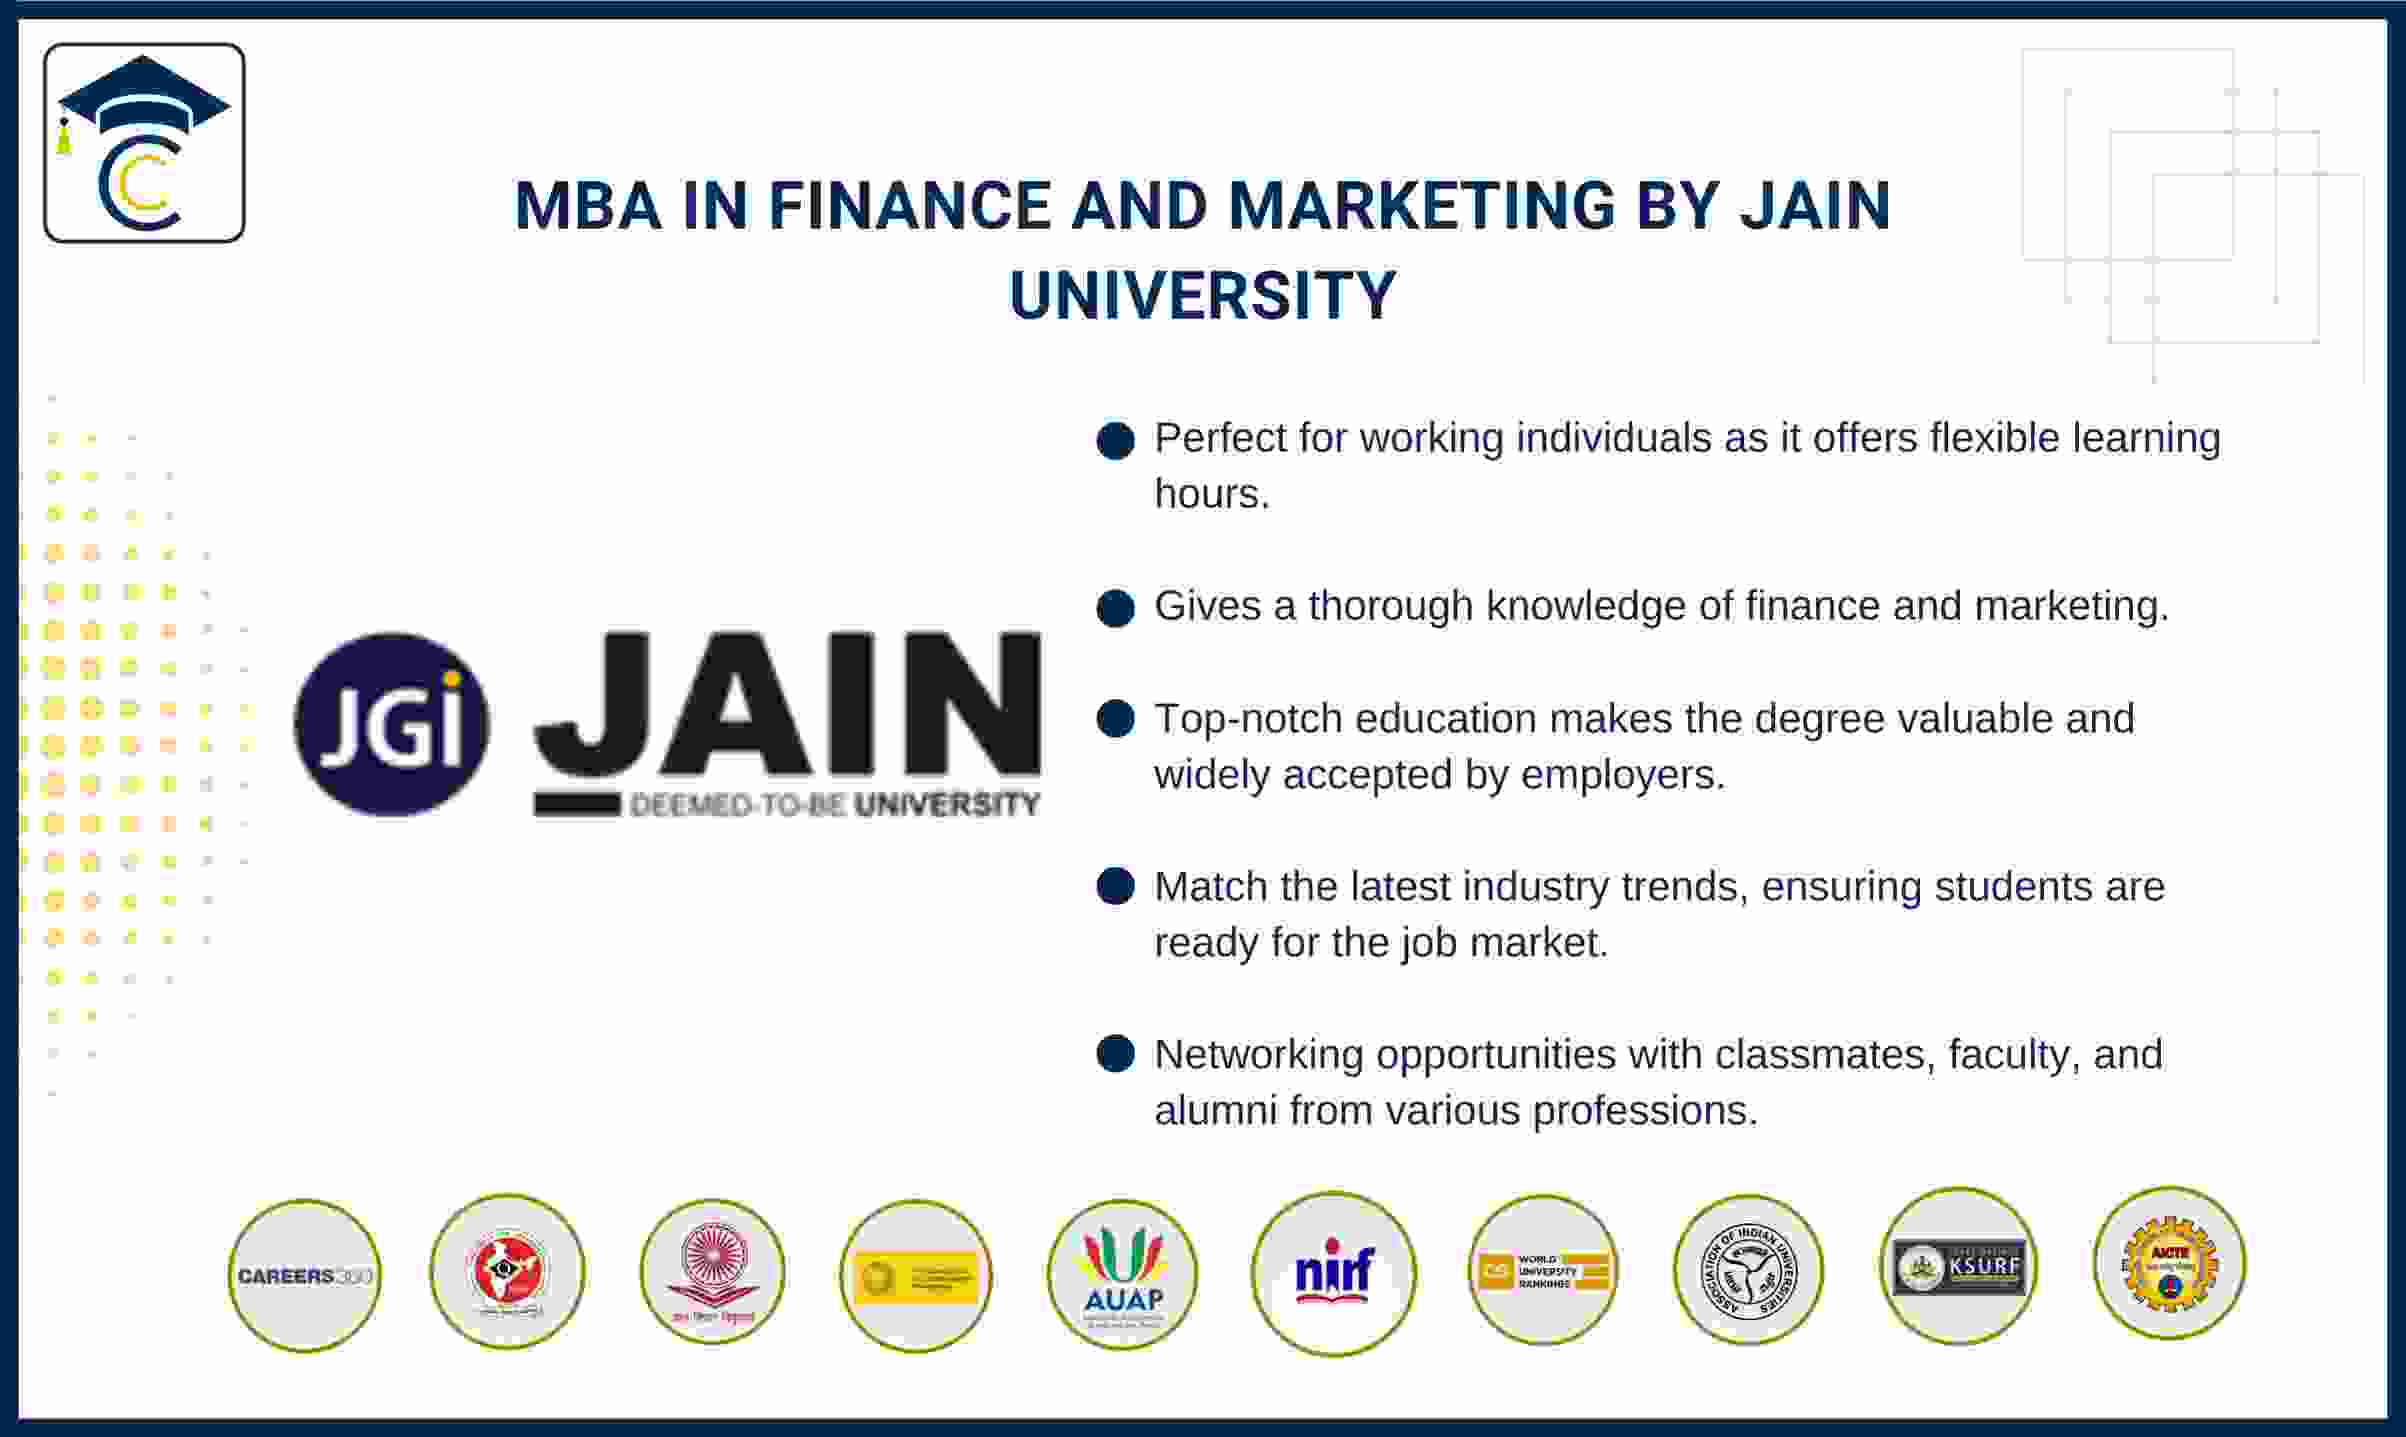 mba-in-finance-and-Marketing-jain-university